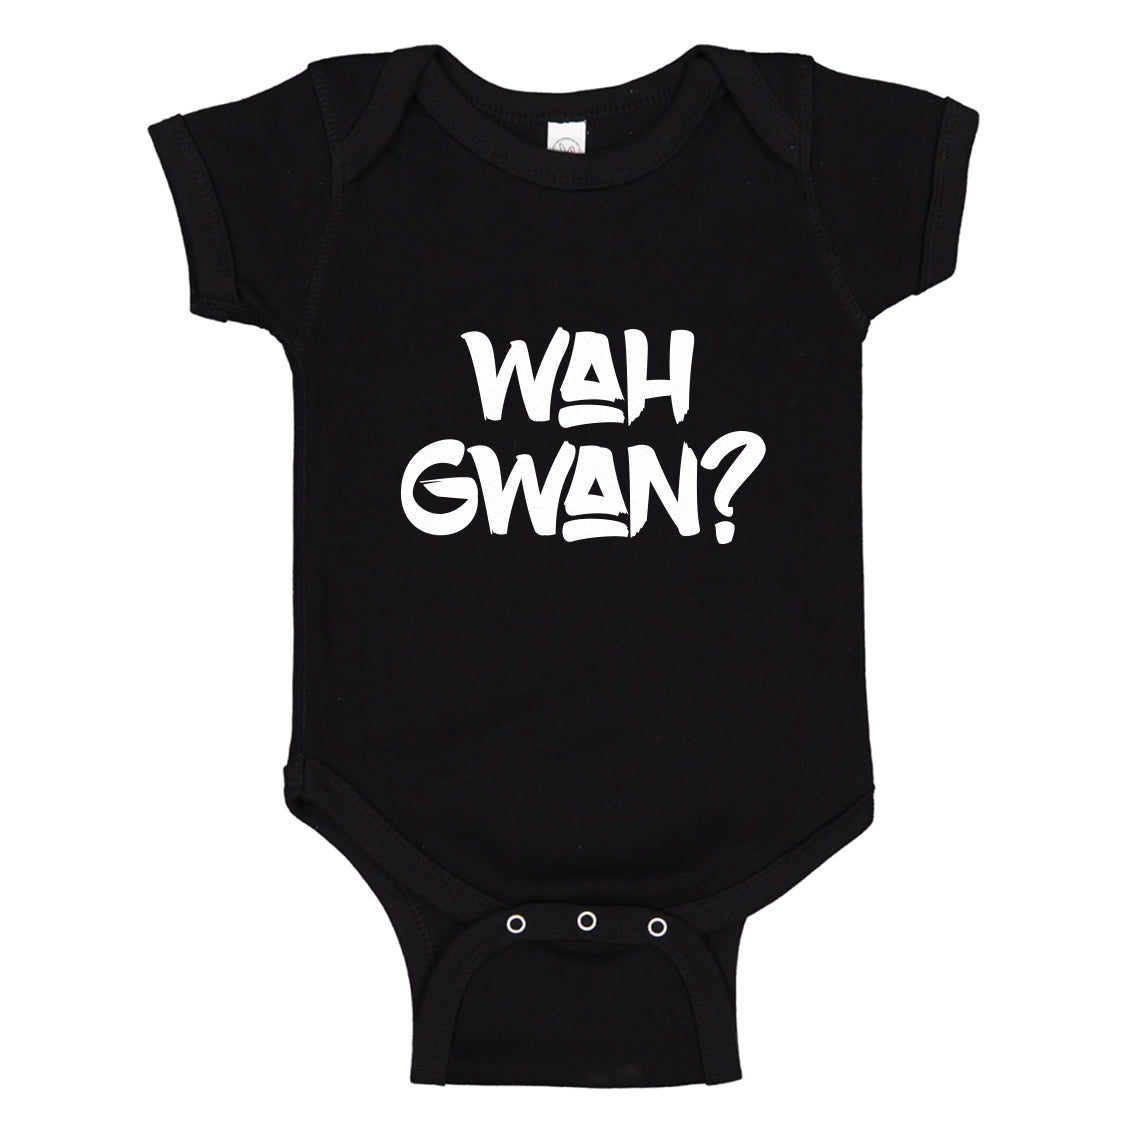 Baby Onesie Wah Gwan? 100% Cotton Infant Bodysuit